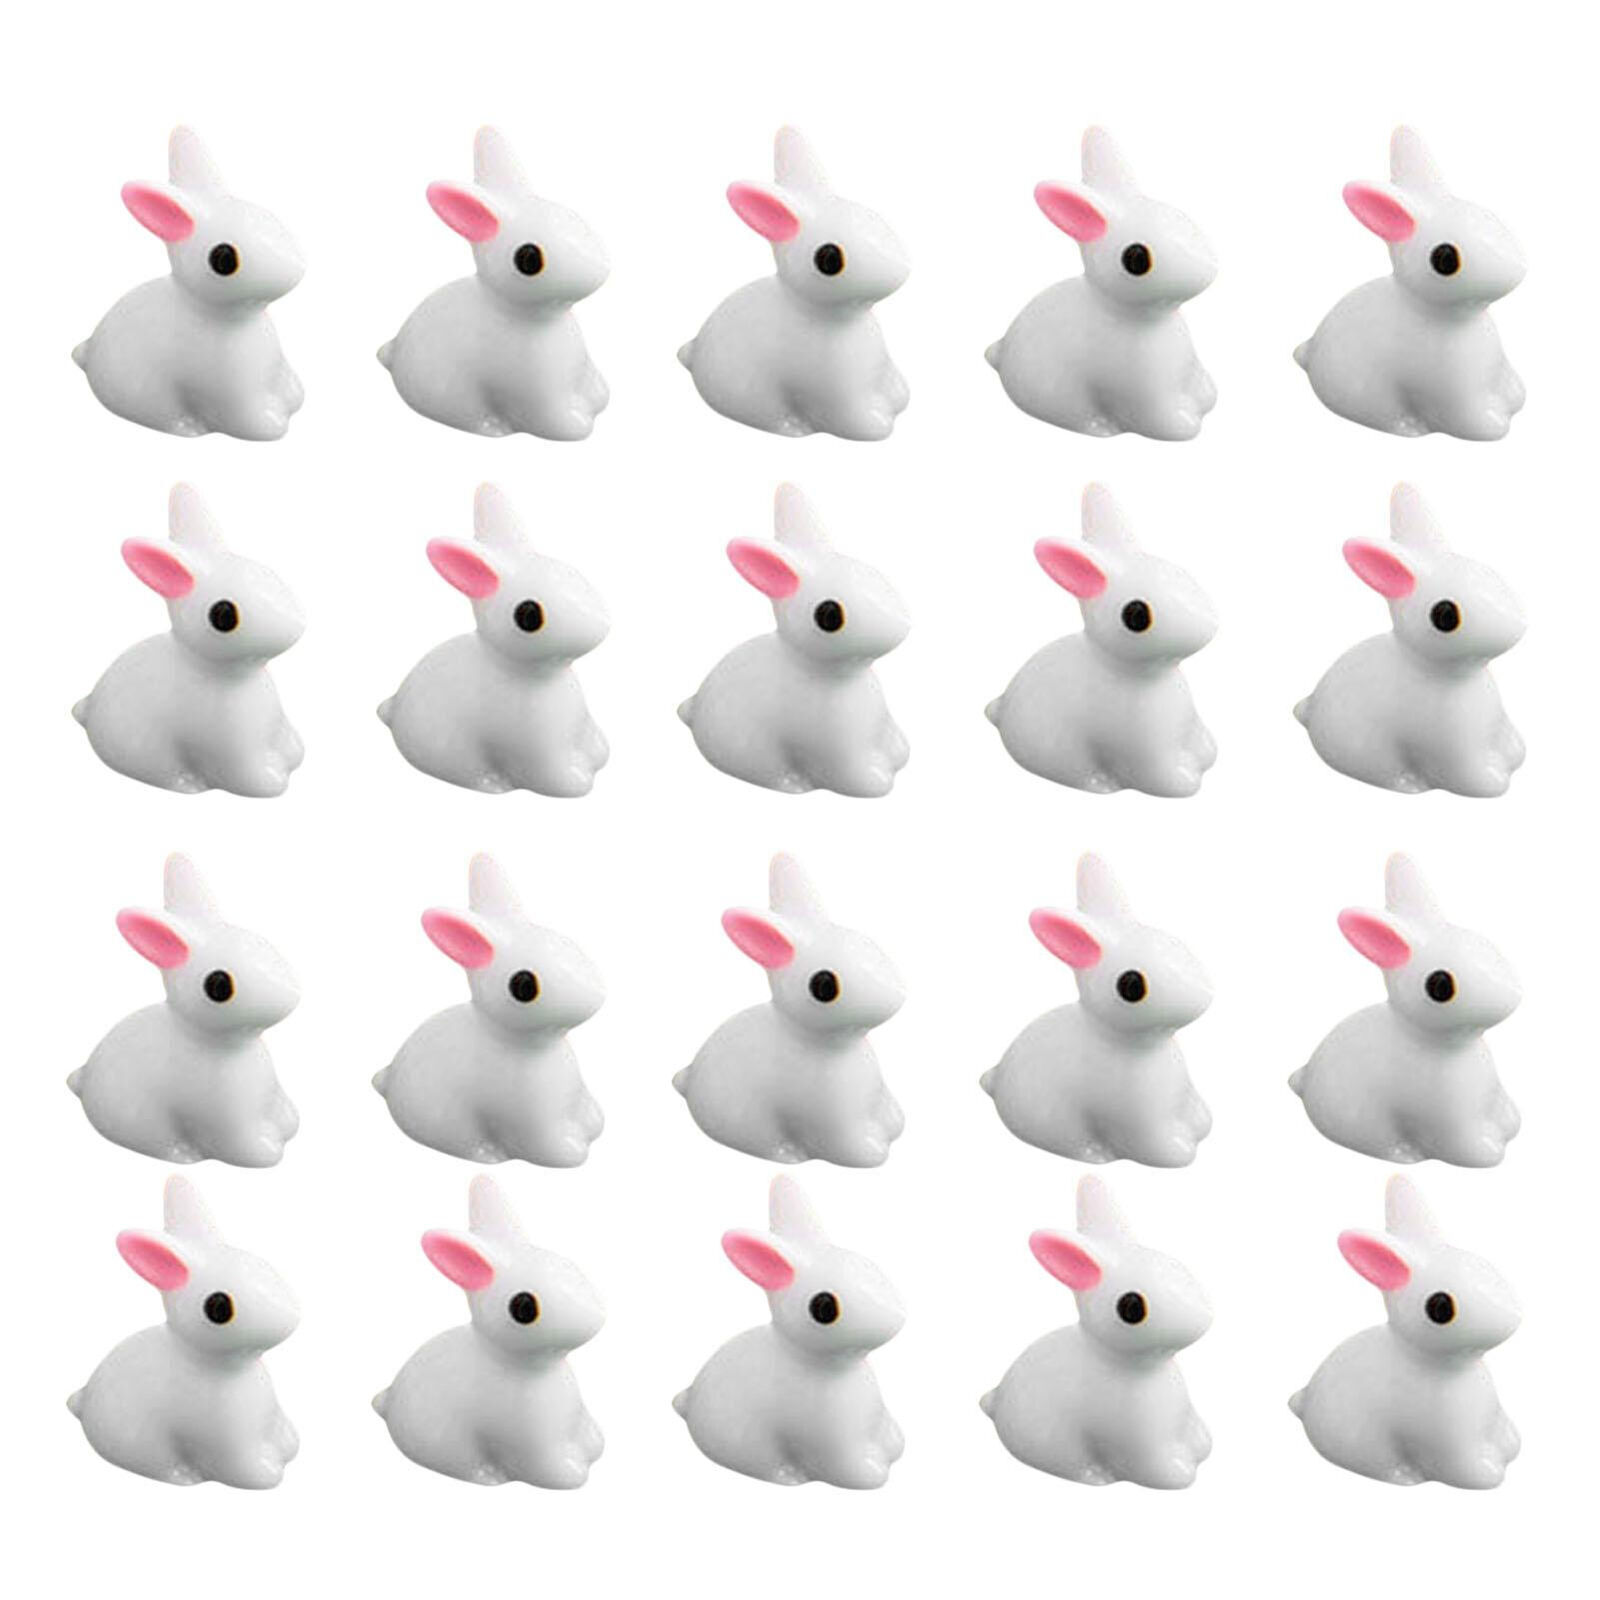  Mini Resin Cute Plush Rabbit Toy Lifelike Animal Bunny Model Decoration